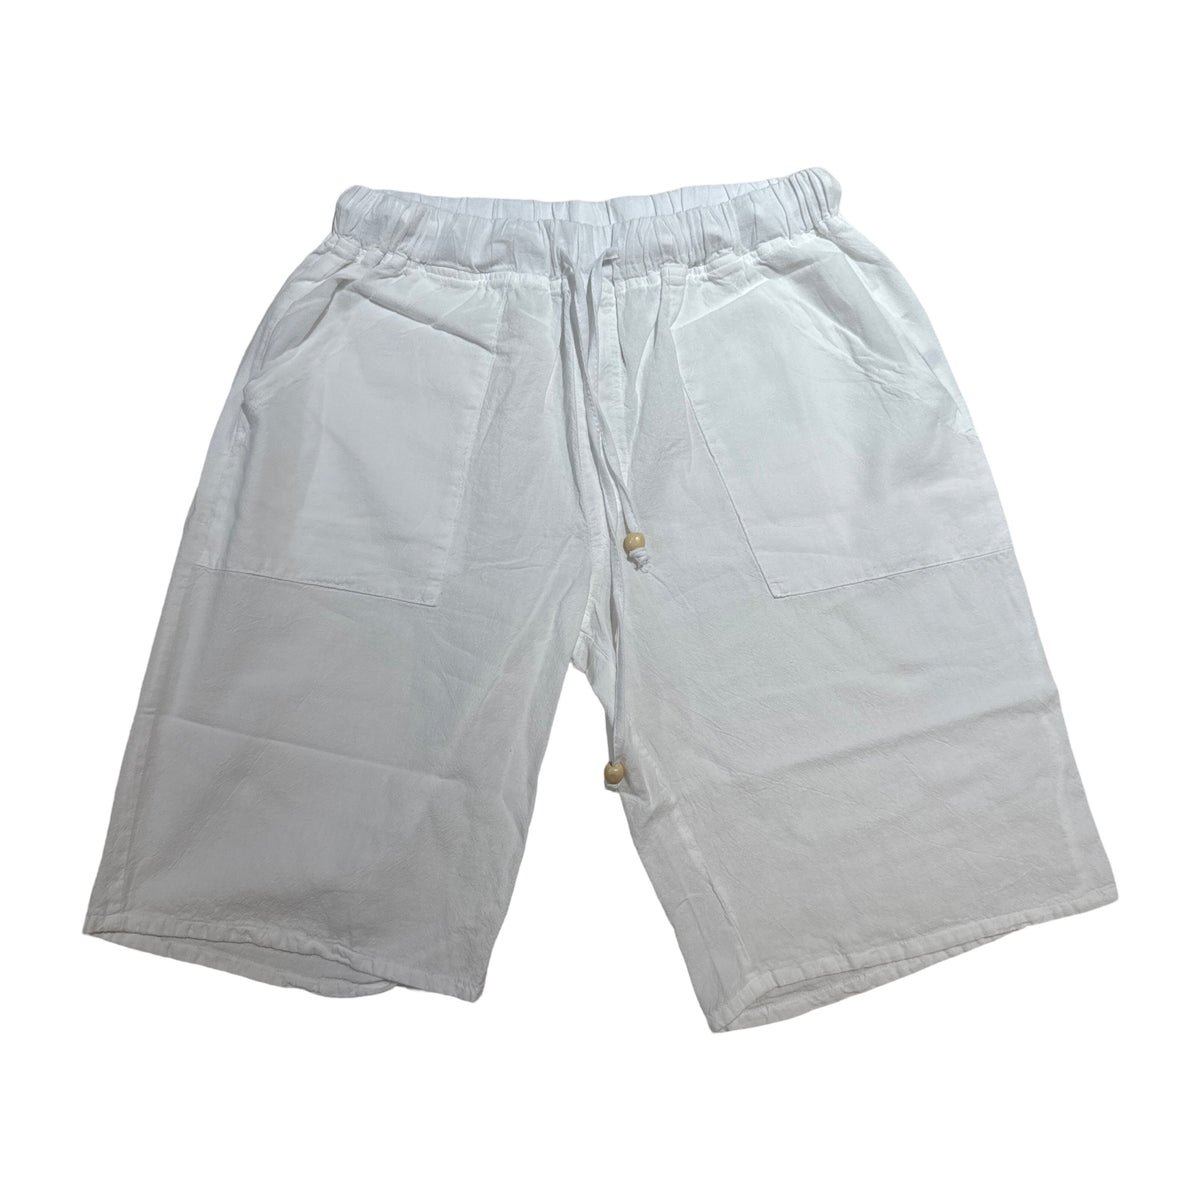 Seaspice White Double Pocket Peruvian Cotton Shorts - Dudes Boutique